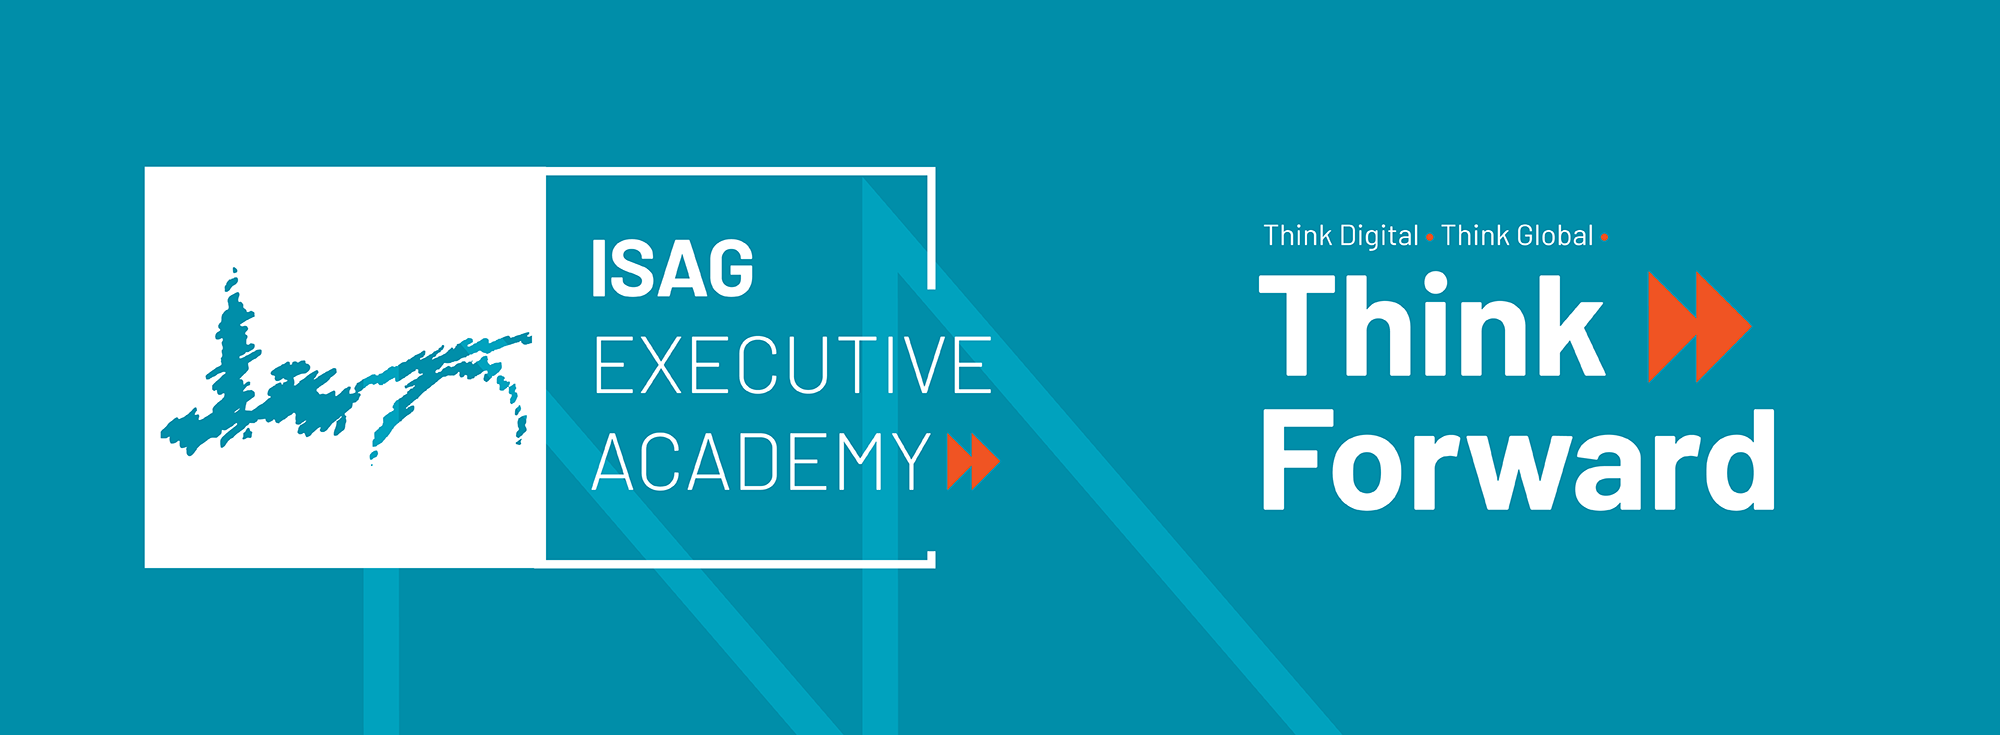 ISAG Executive Academy